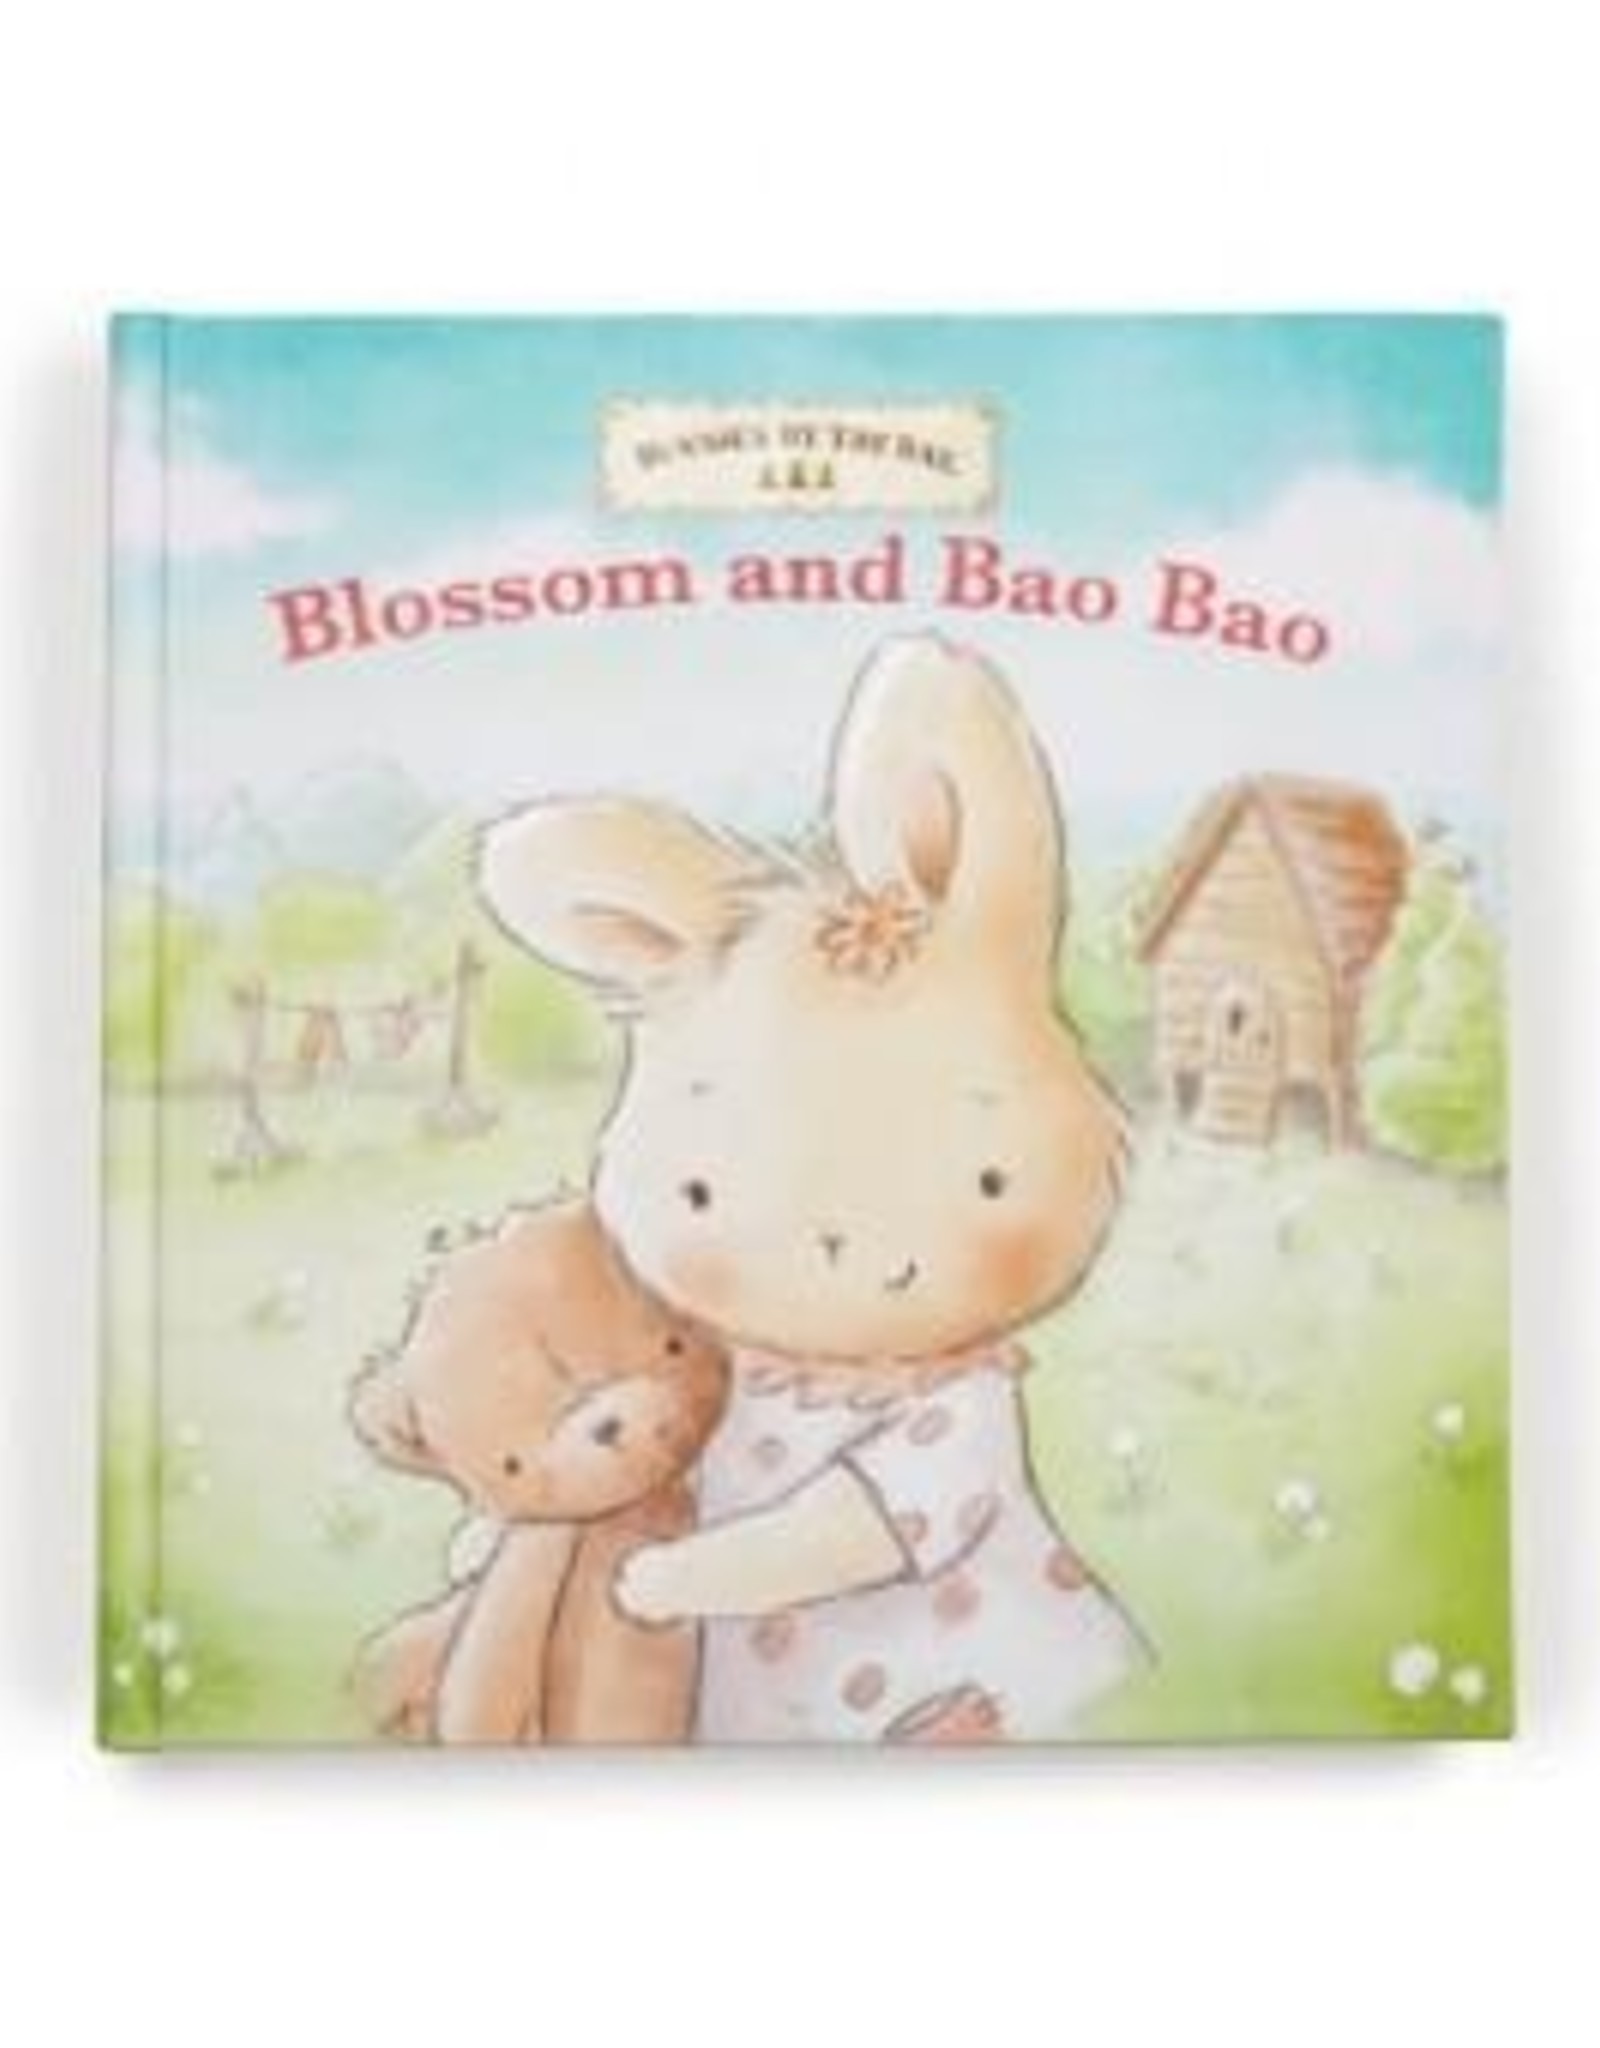 Bunnies By The Bay 100213 Blossom and Boa Boa book